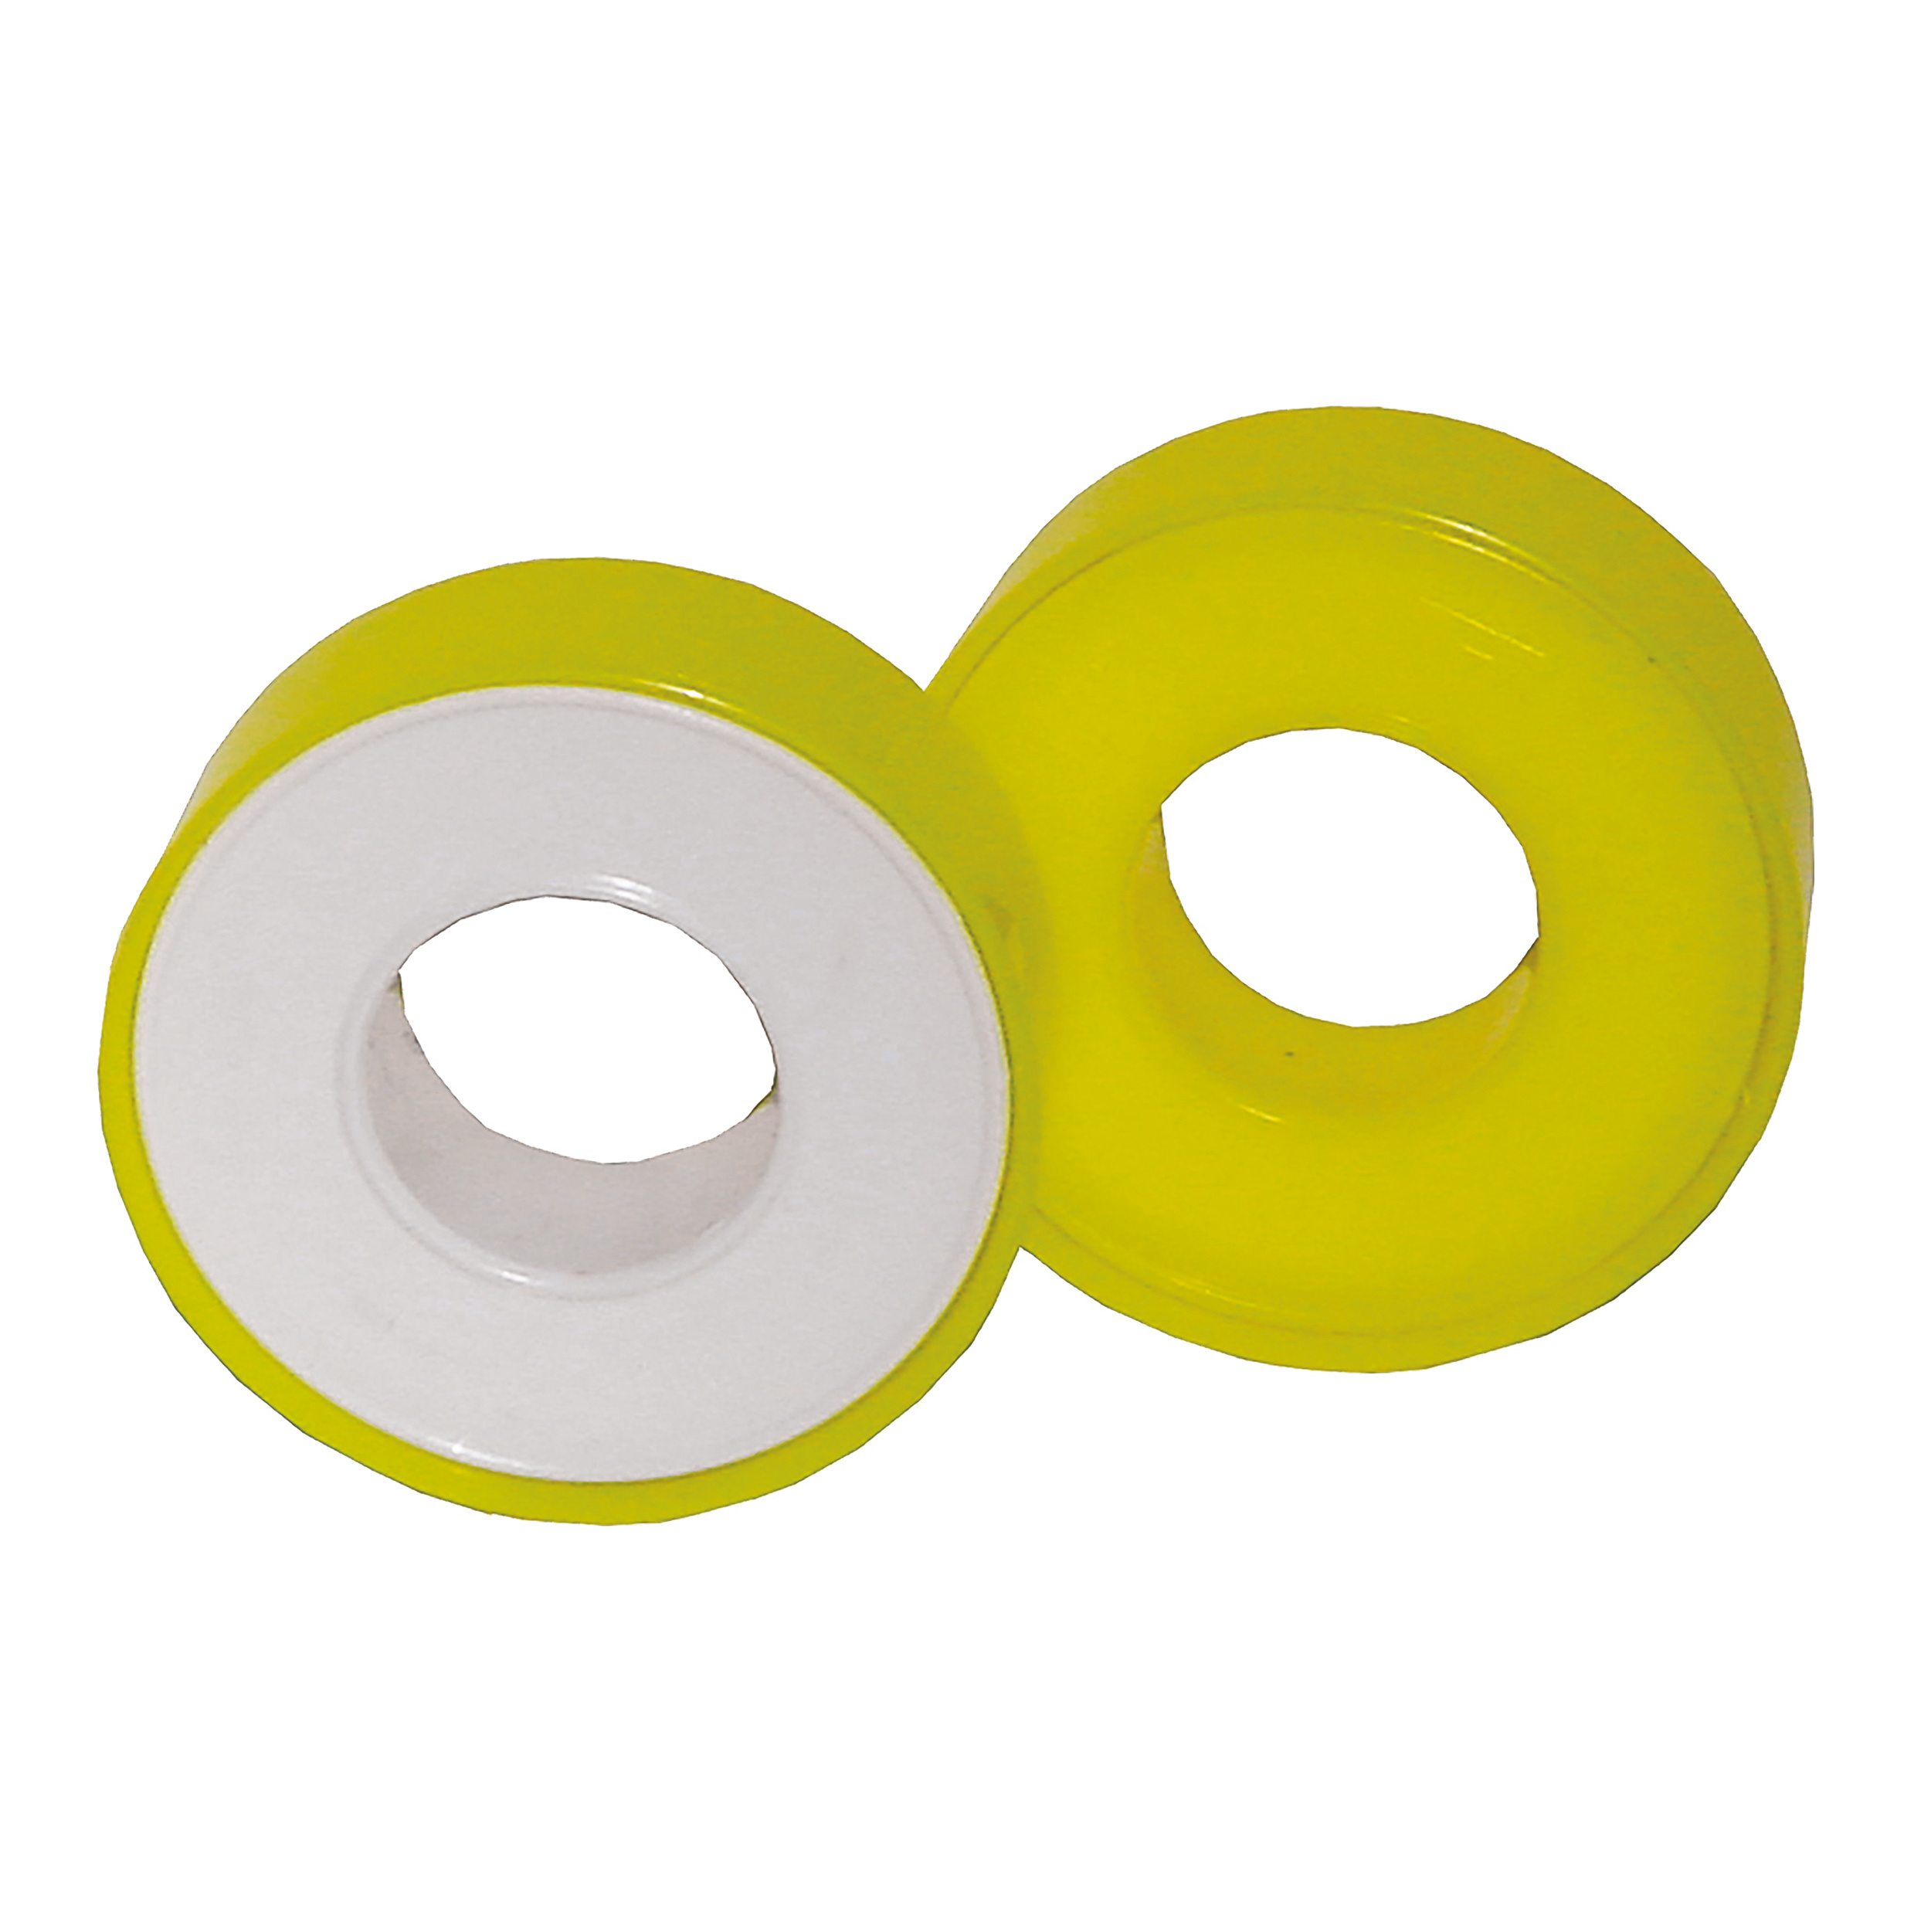 Teflon tape, fine thread FRp, teflon share: 60 g/m², length: 12 m, strength: 0.10 mm, width: 12 mm, Trange: -20 °C to +125 °C